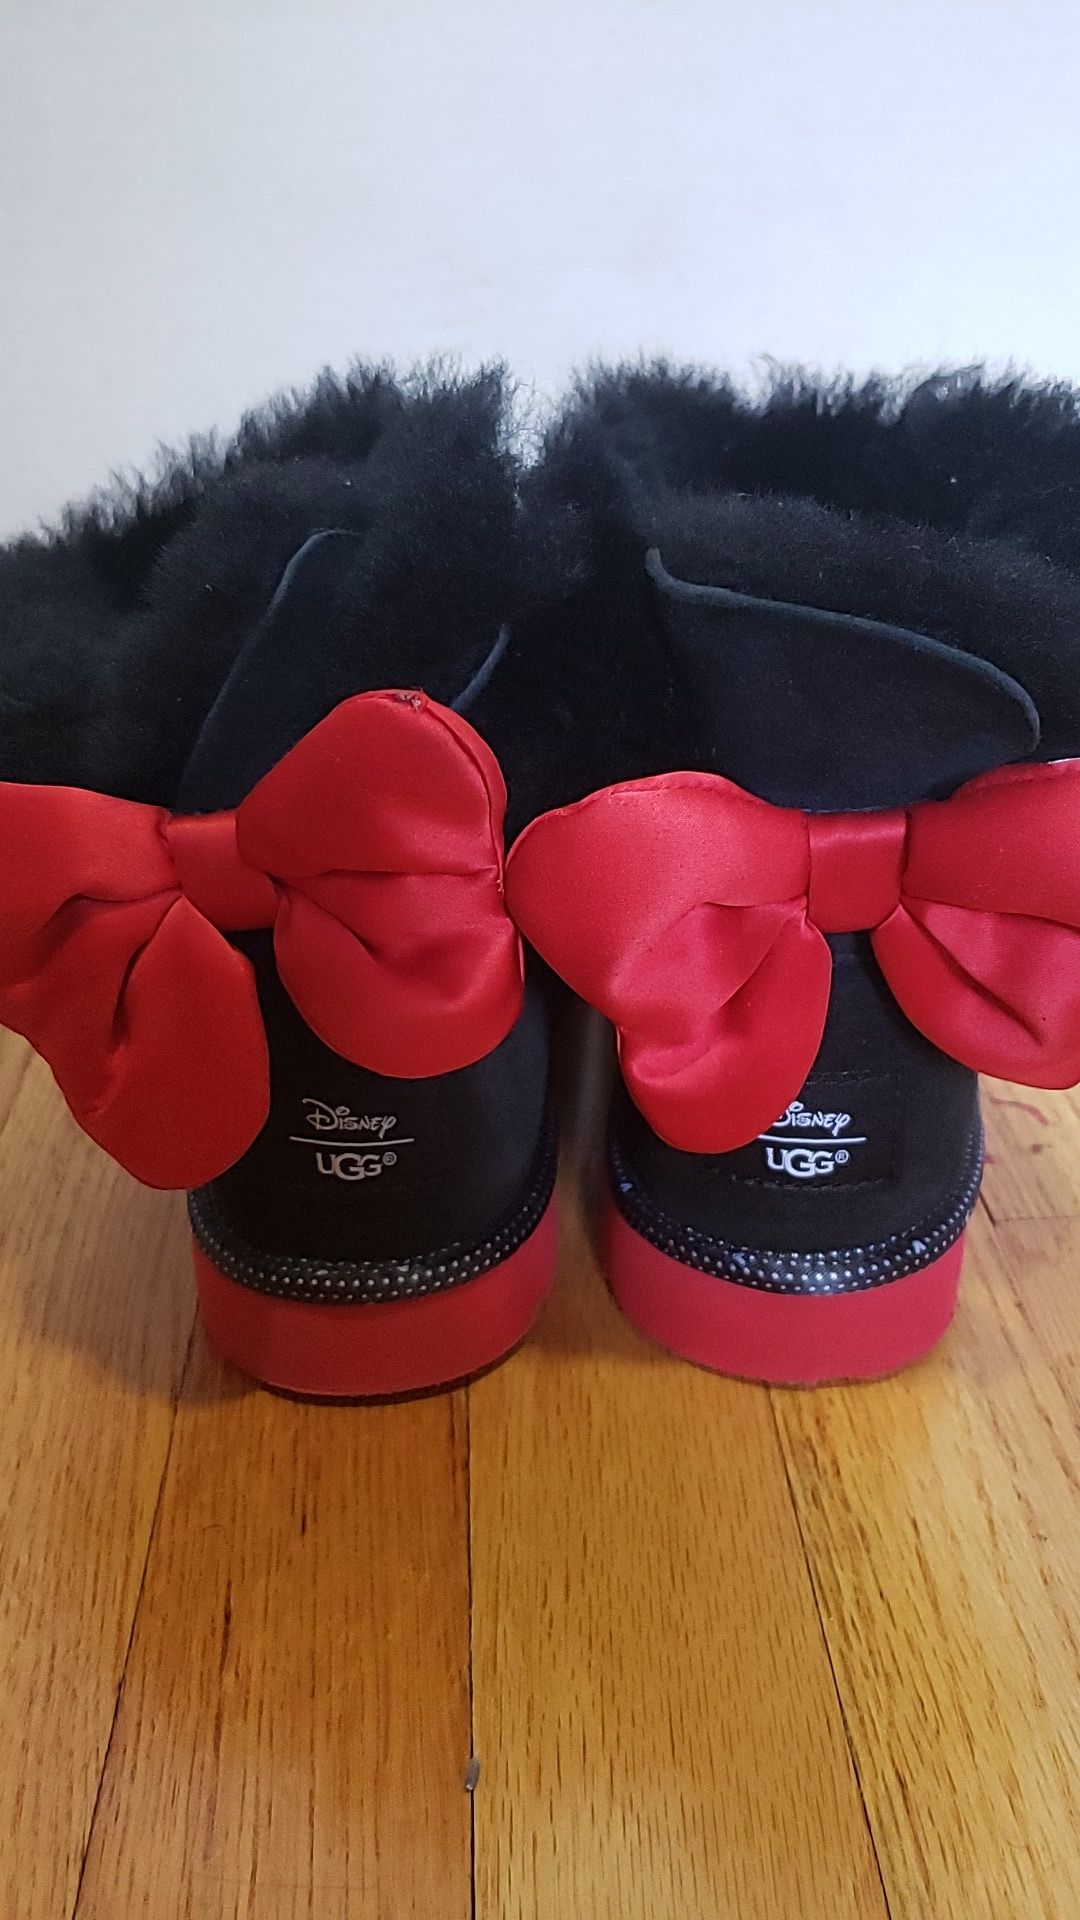 UGG Australia, Disney Minnie Mouse children's boot